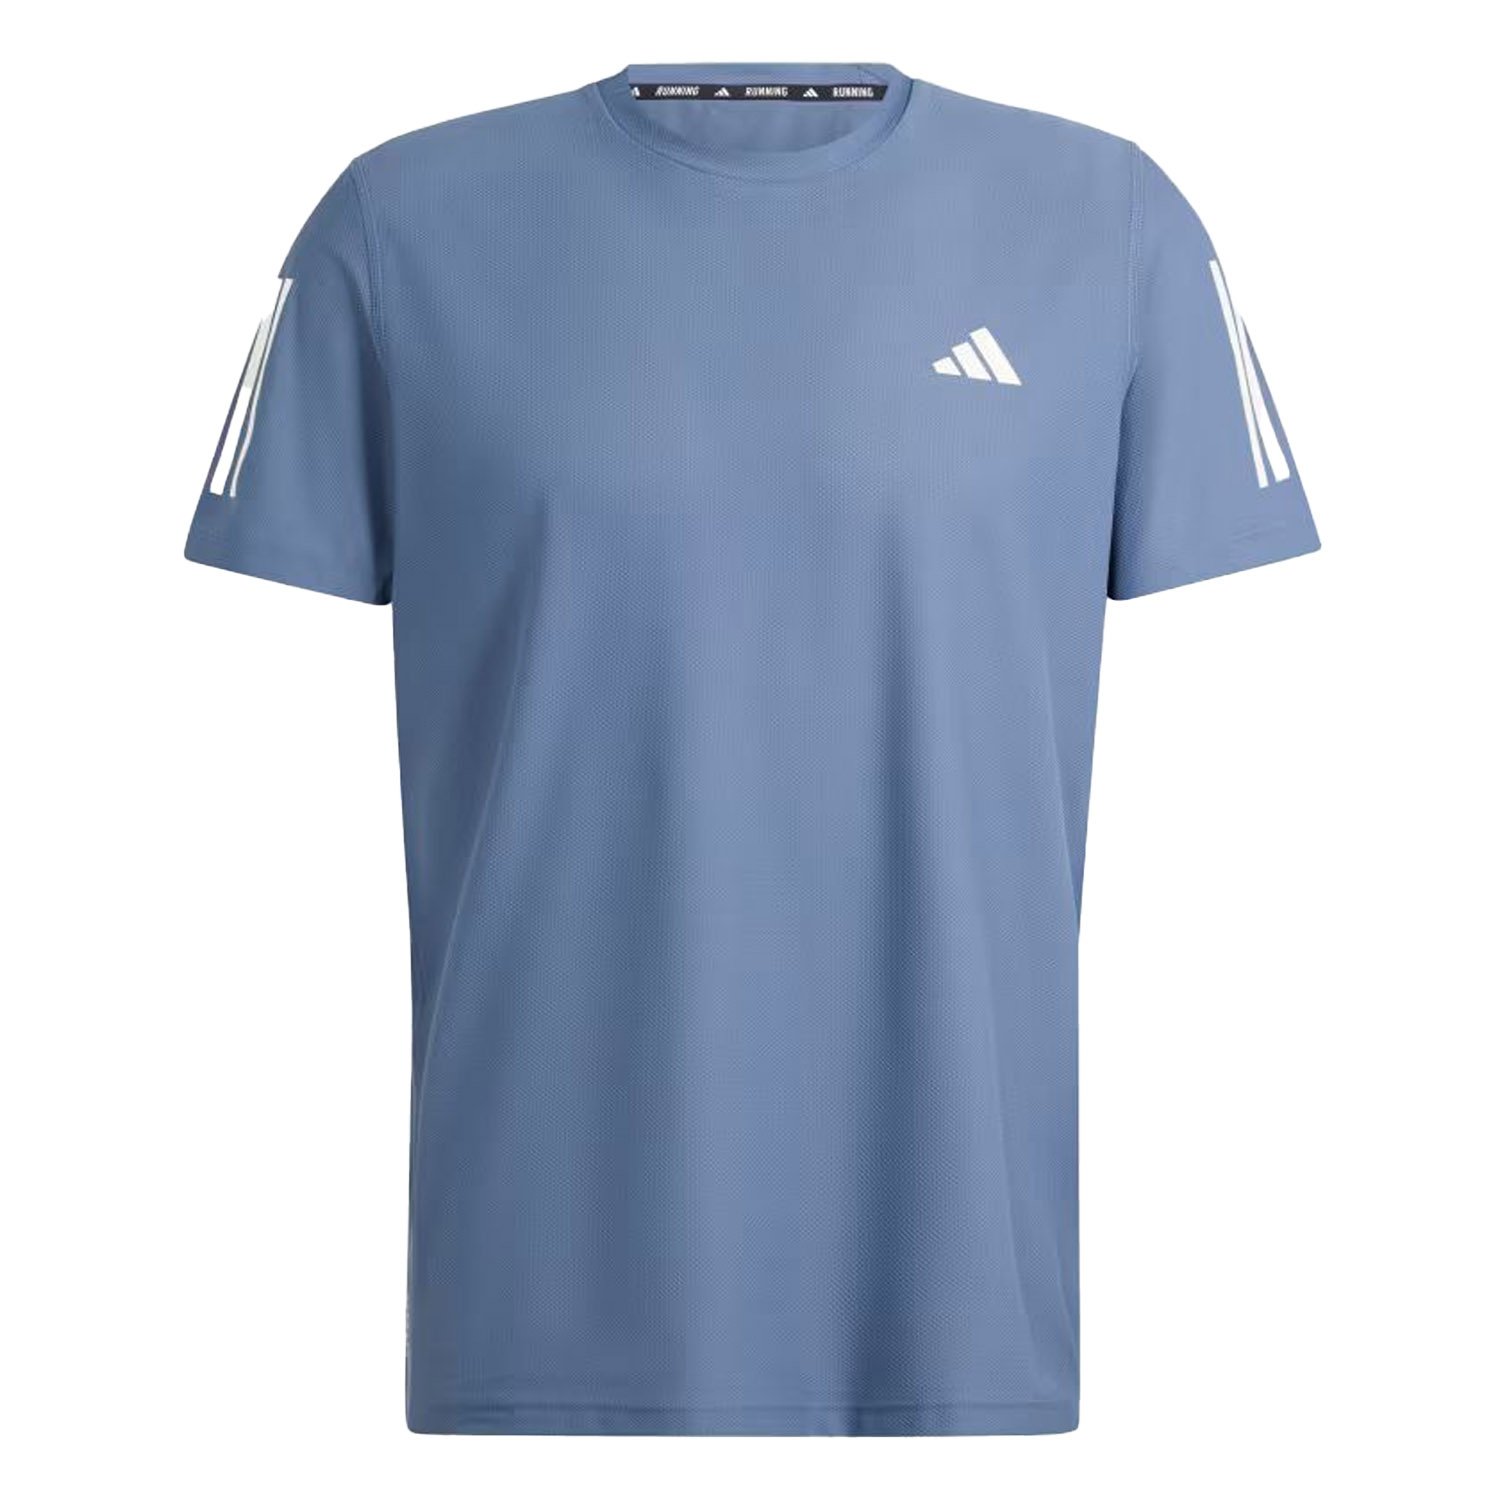 Adidas Otr B Erkek Koşu Tişörtü - Renkli - 1